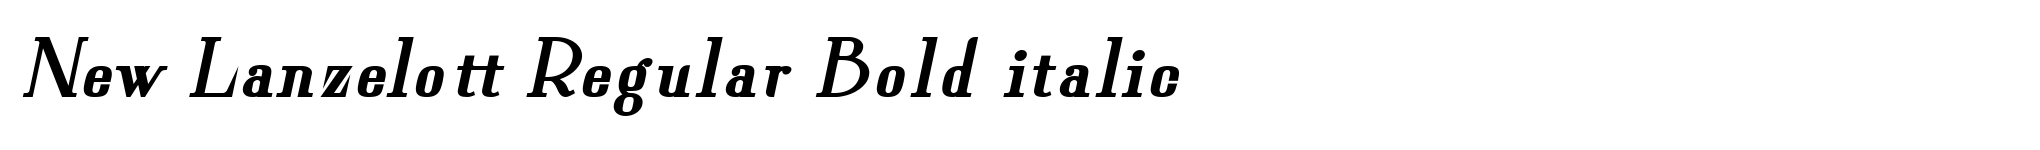 New Lanzelott Regular Bold italic image